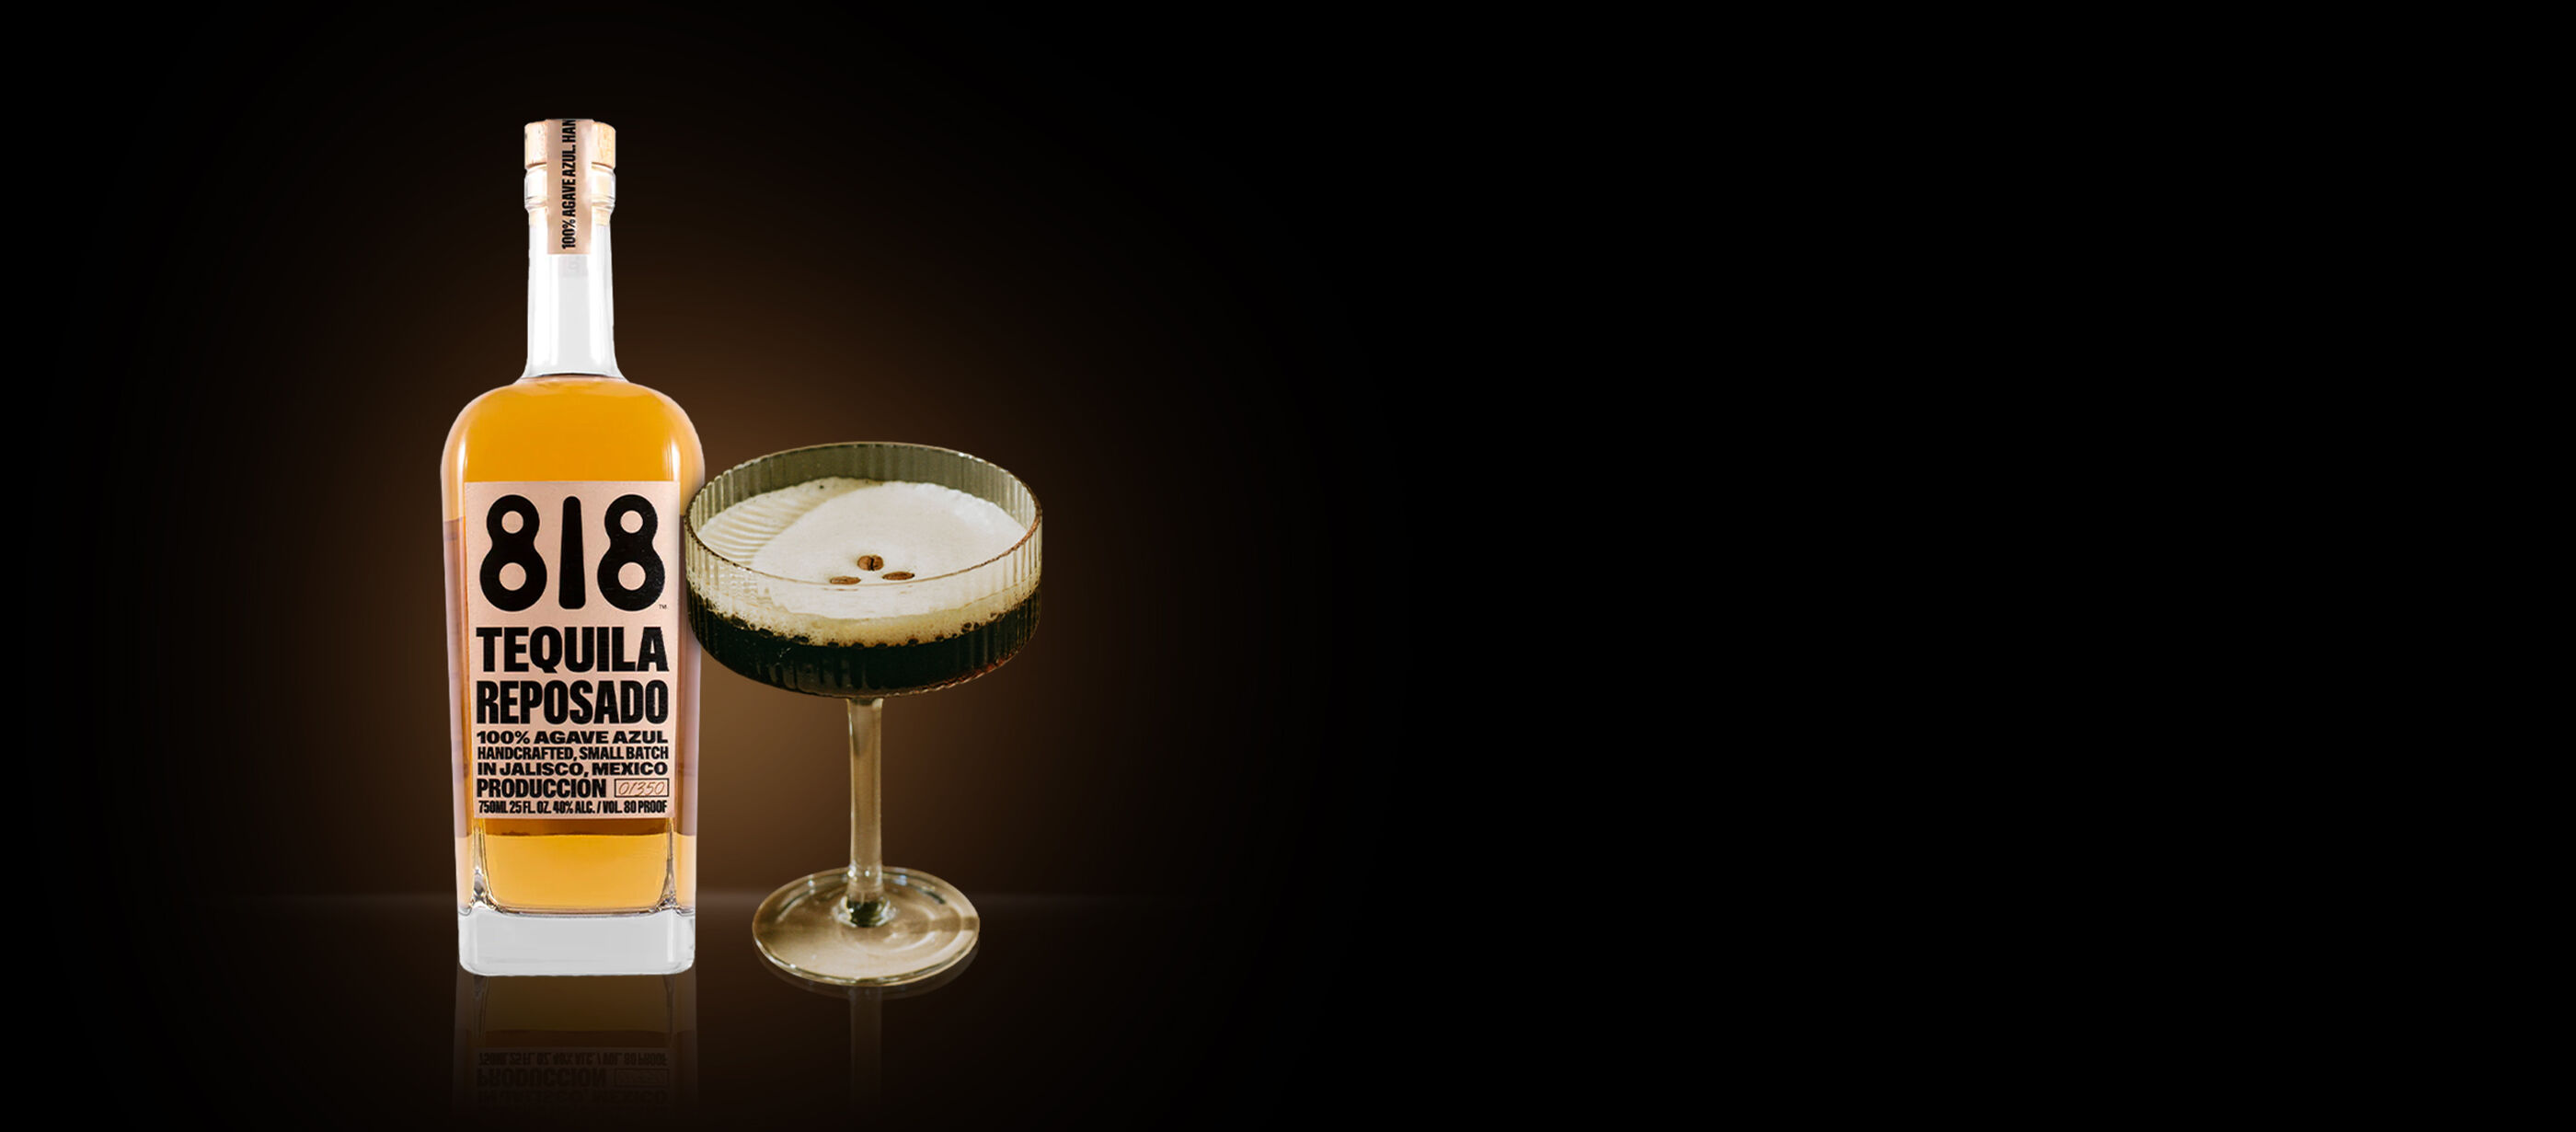 818 Tequila Reposado Espresso Martini Cocktail